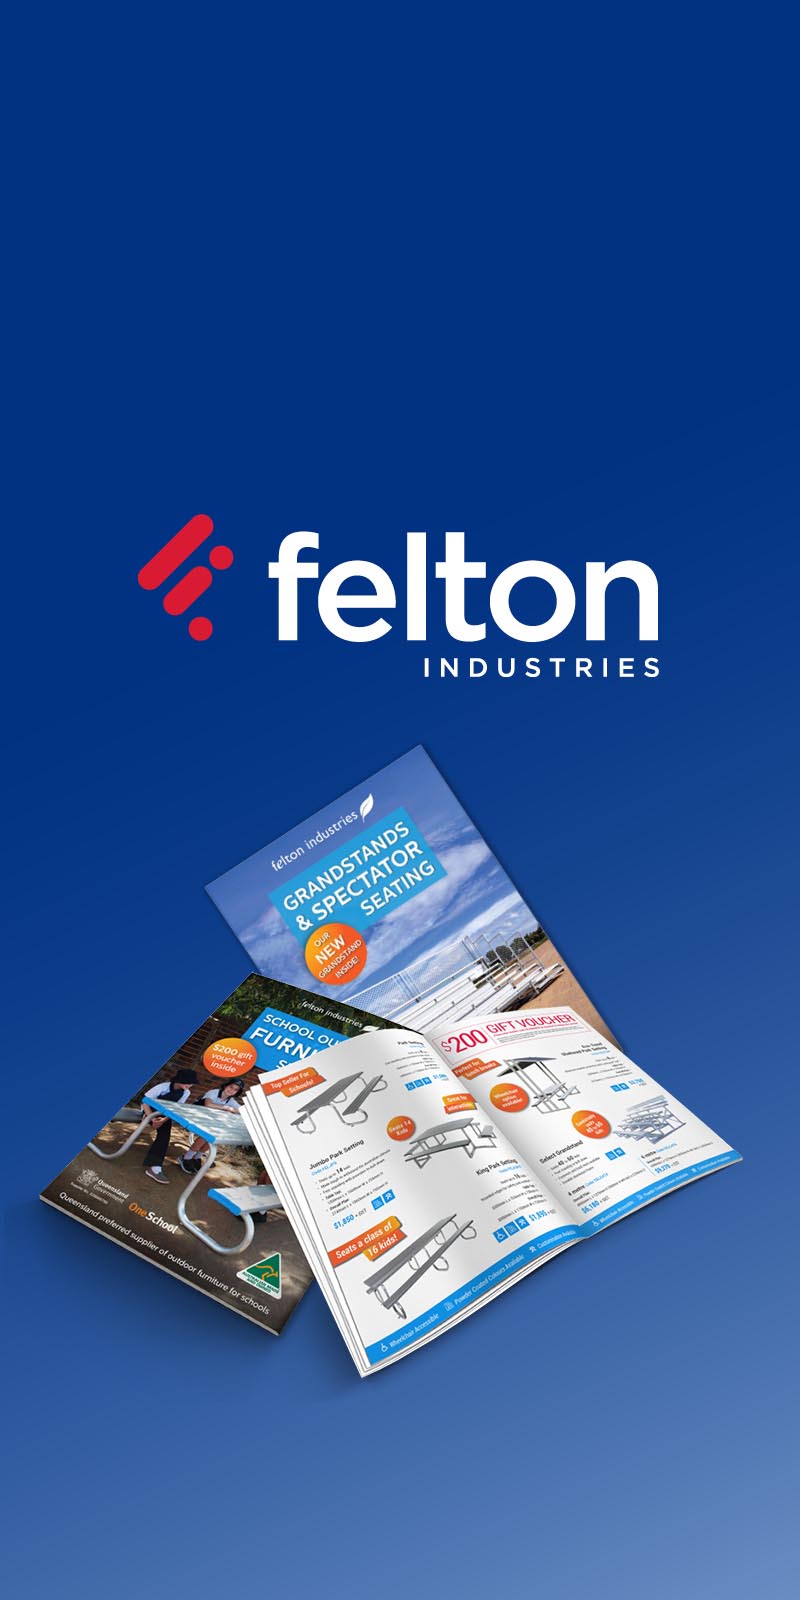 Felton Industries Marketing Campaigns